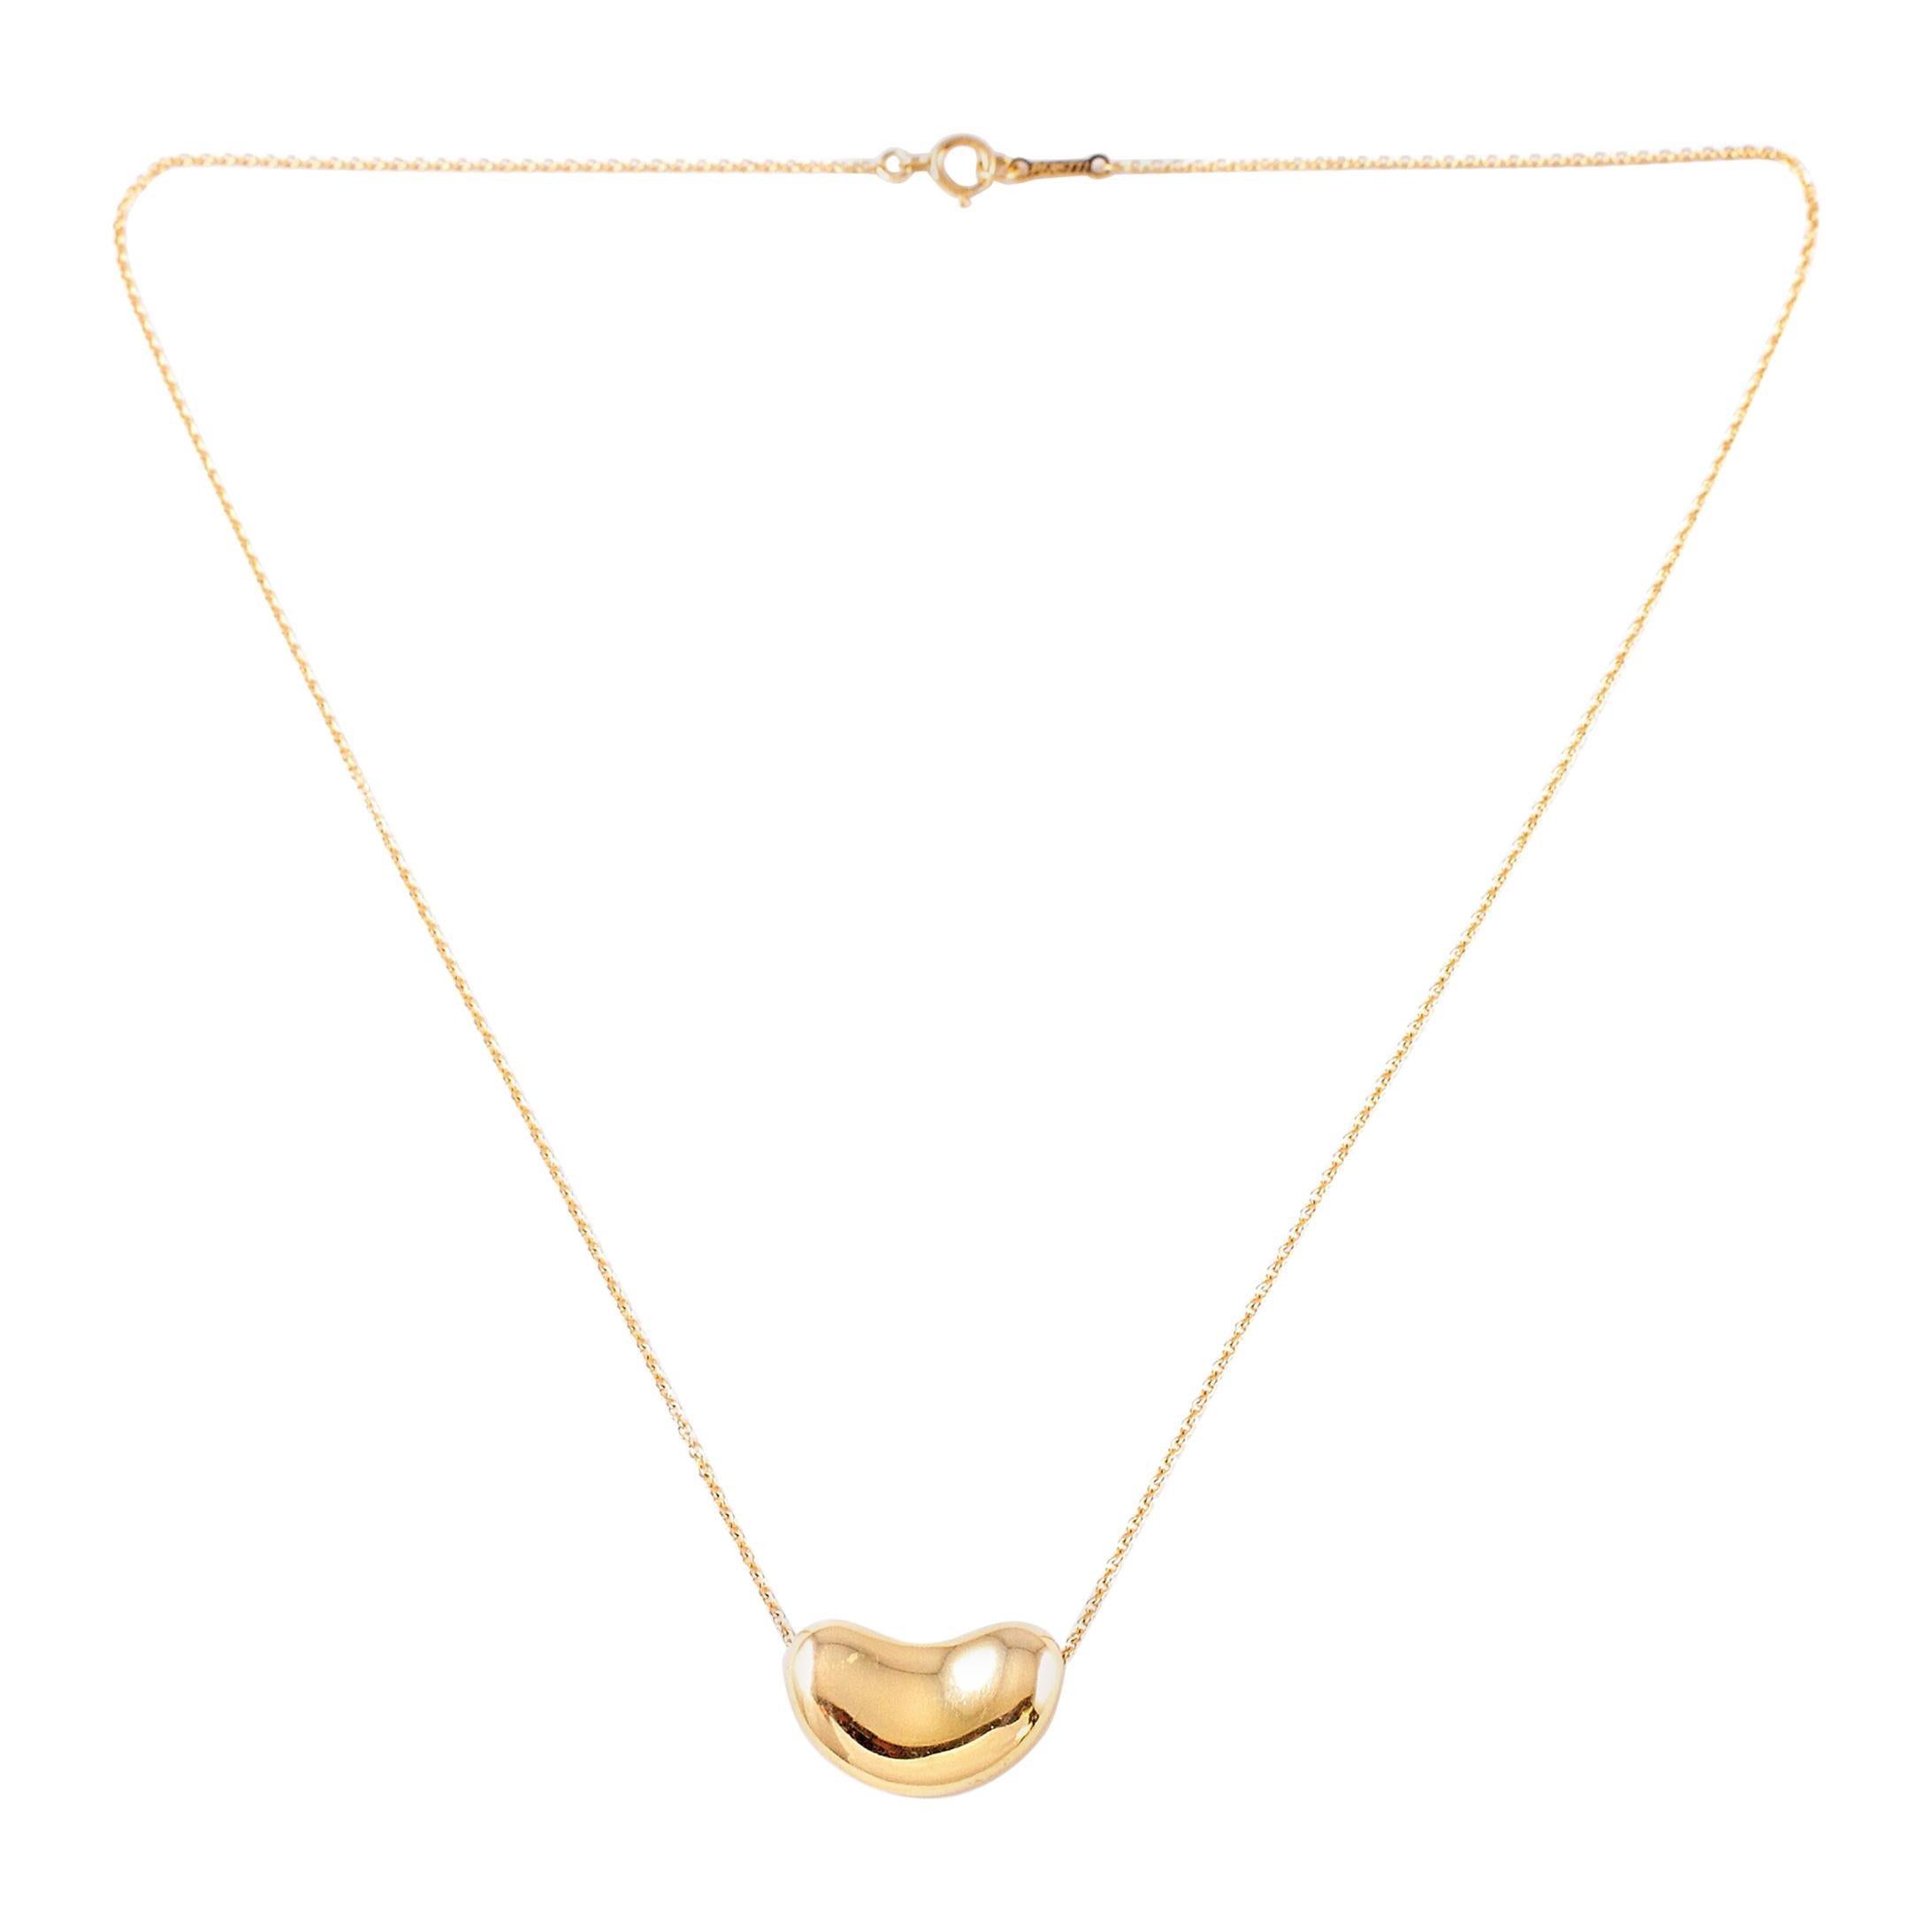 Tiffany & Co. Elsa Peretti Bean Necklace in 18 Karat Yellow Gold